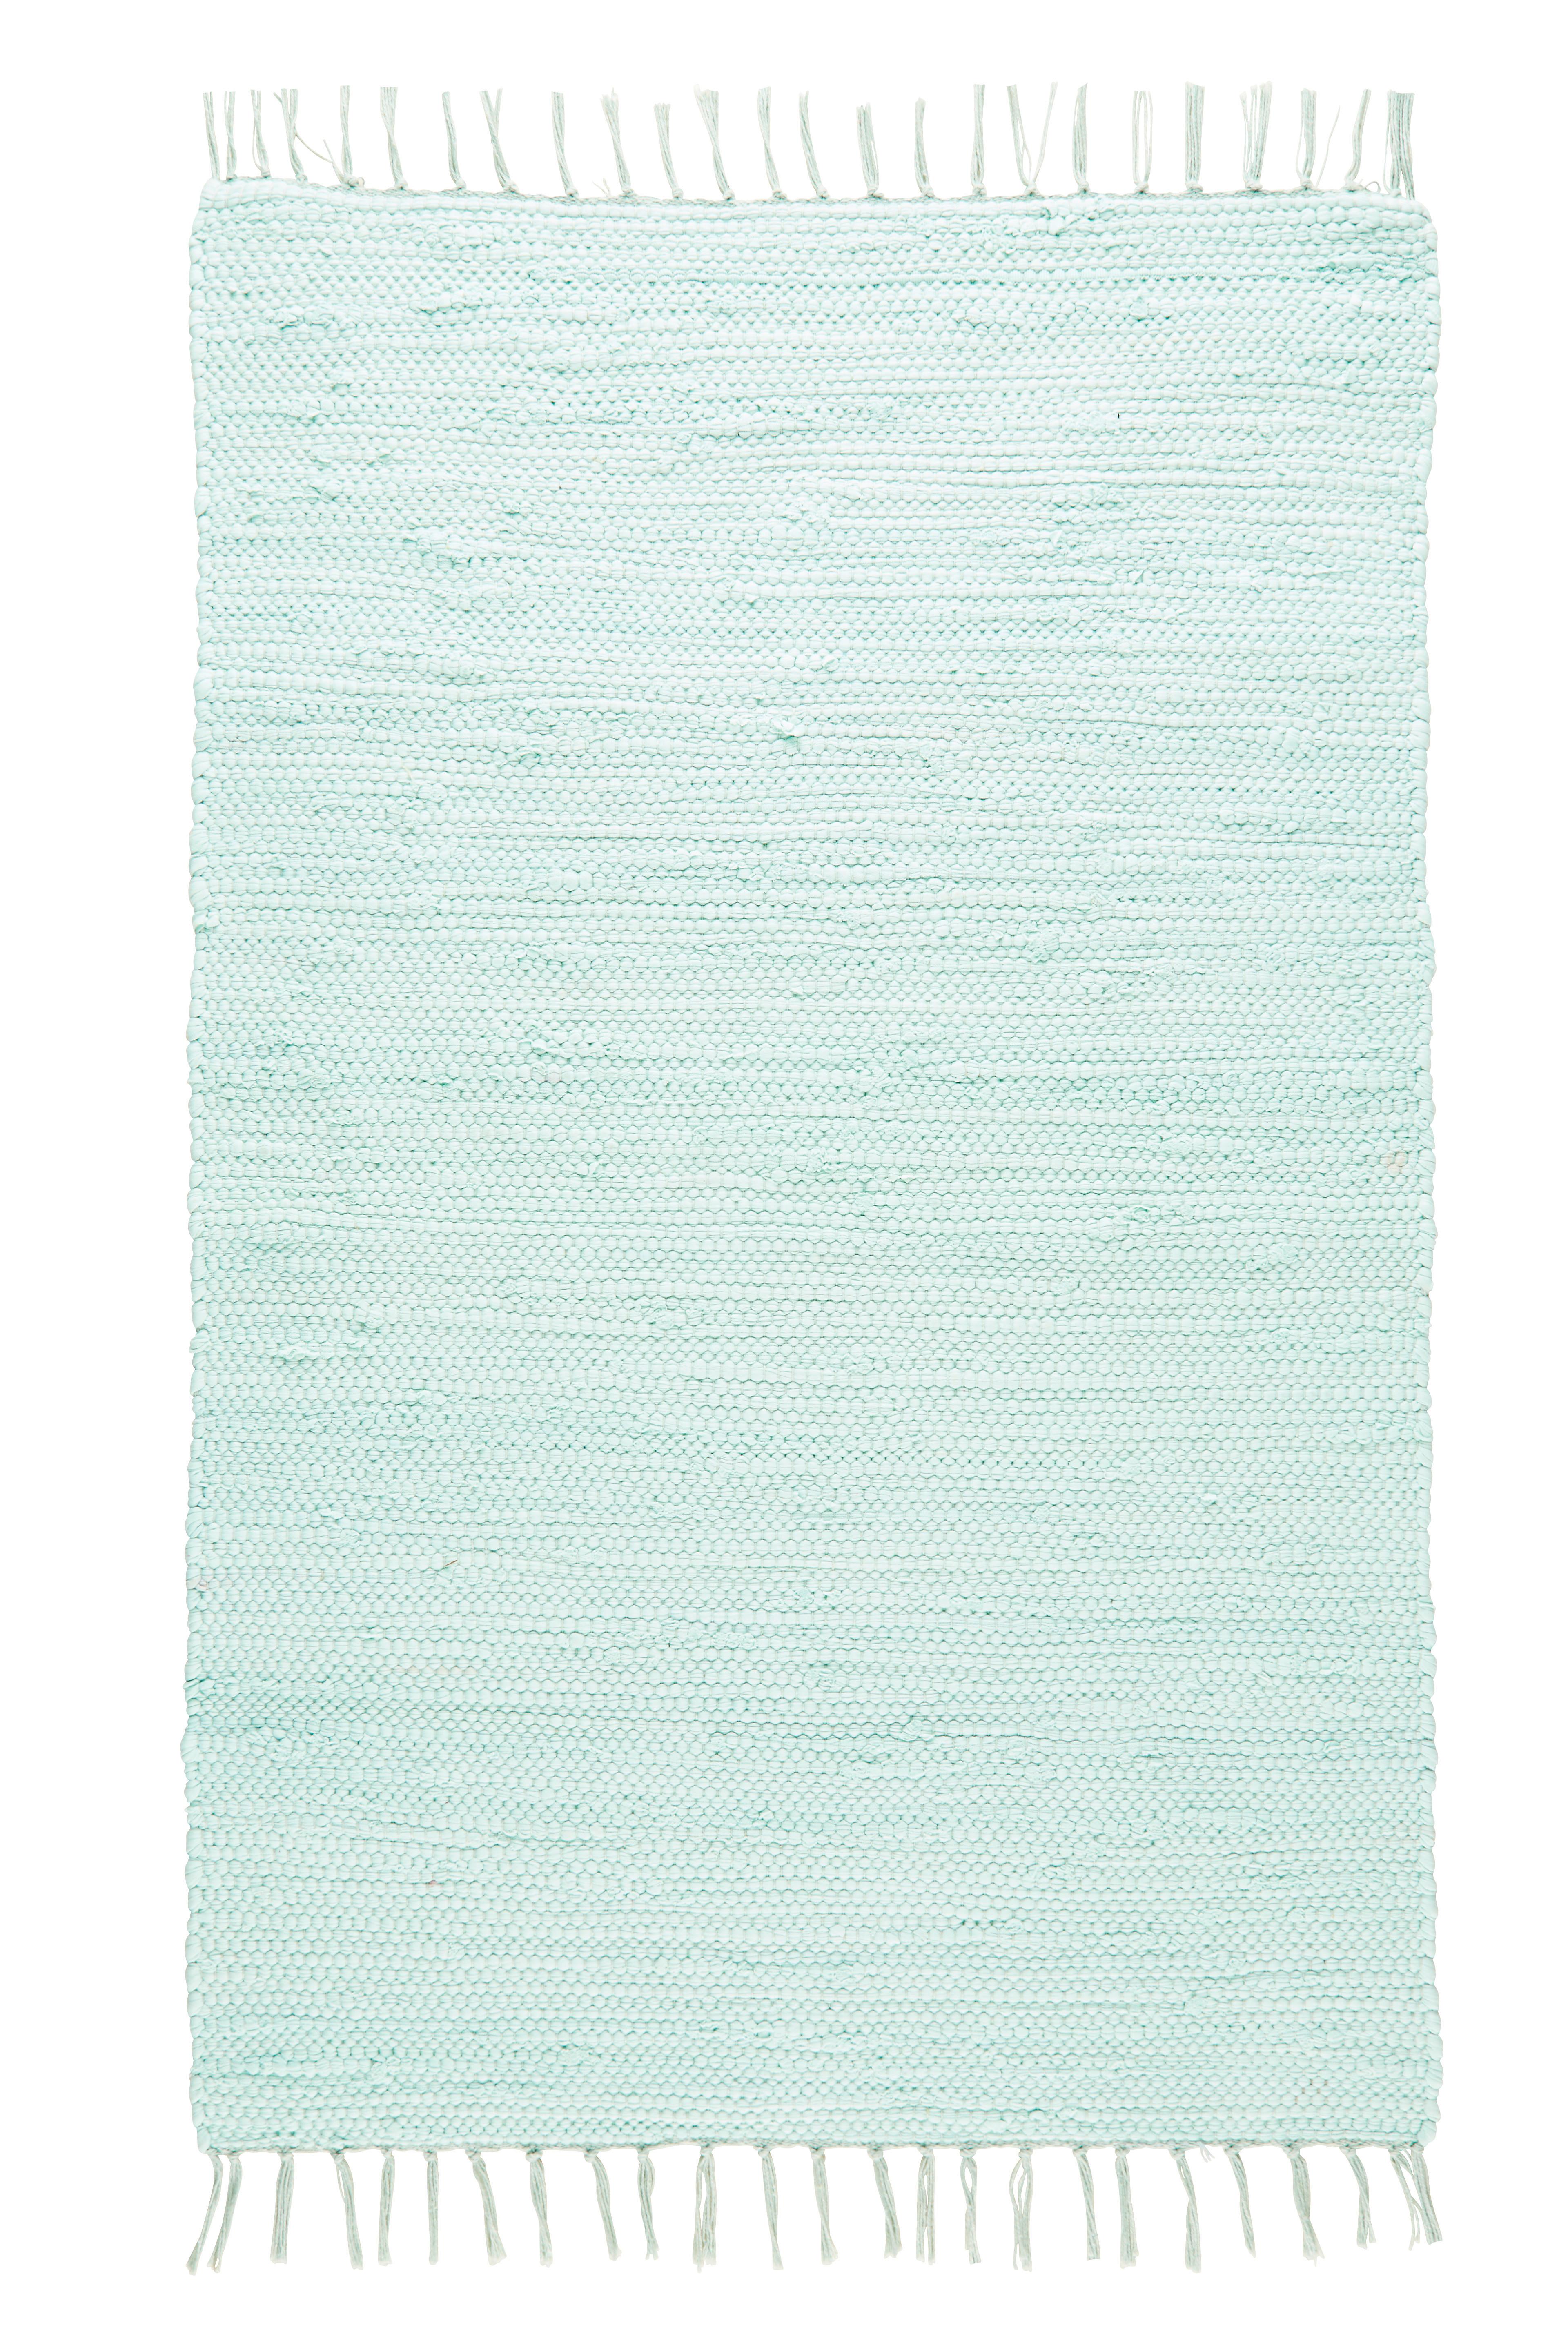 Covor din cârpe Julia 3 - verde deschis, Romantik / Landhaus, textil (70/230cm) - Modern Living